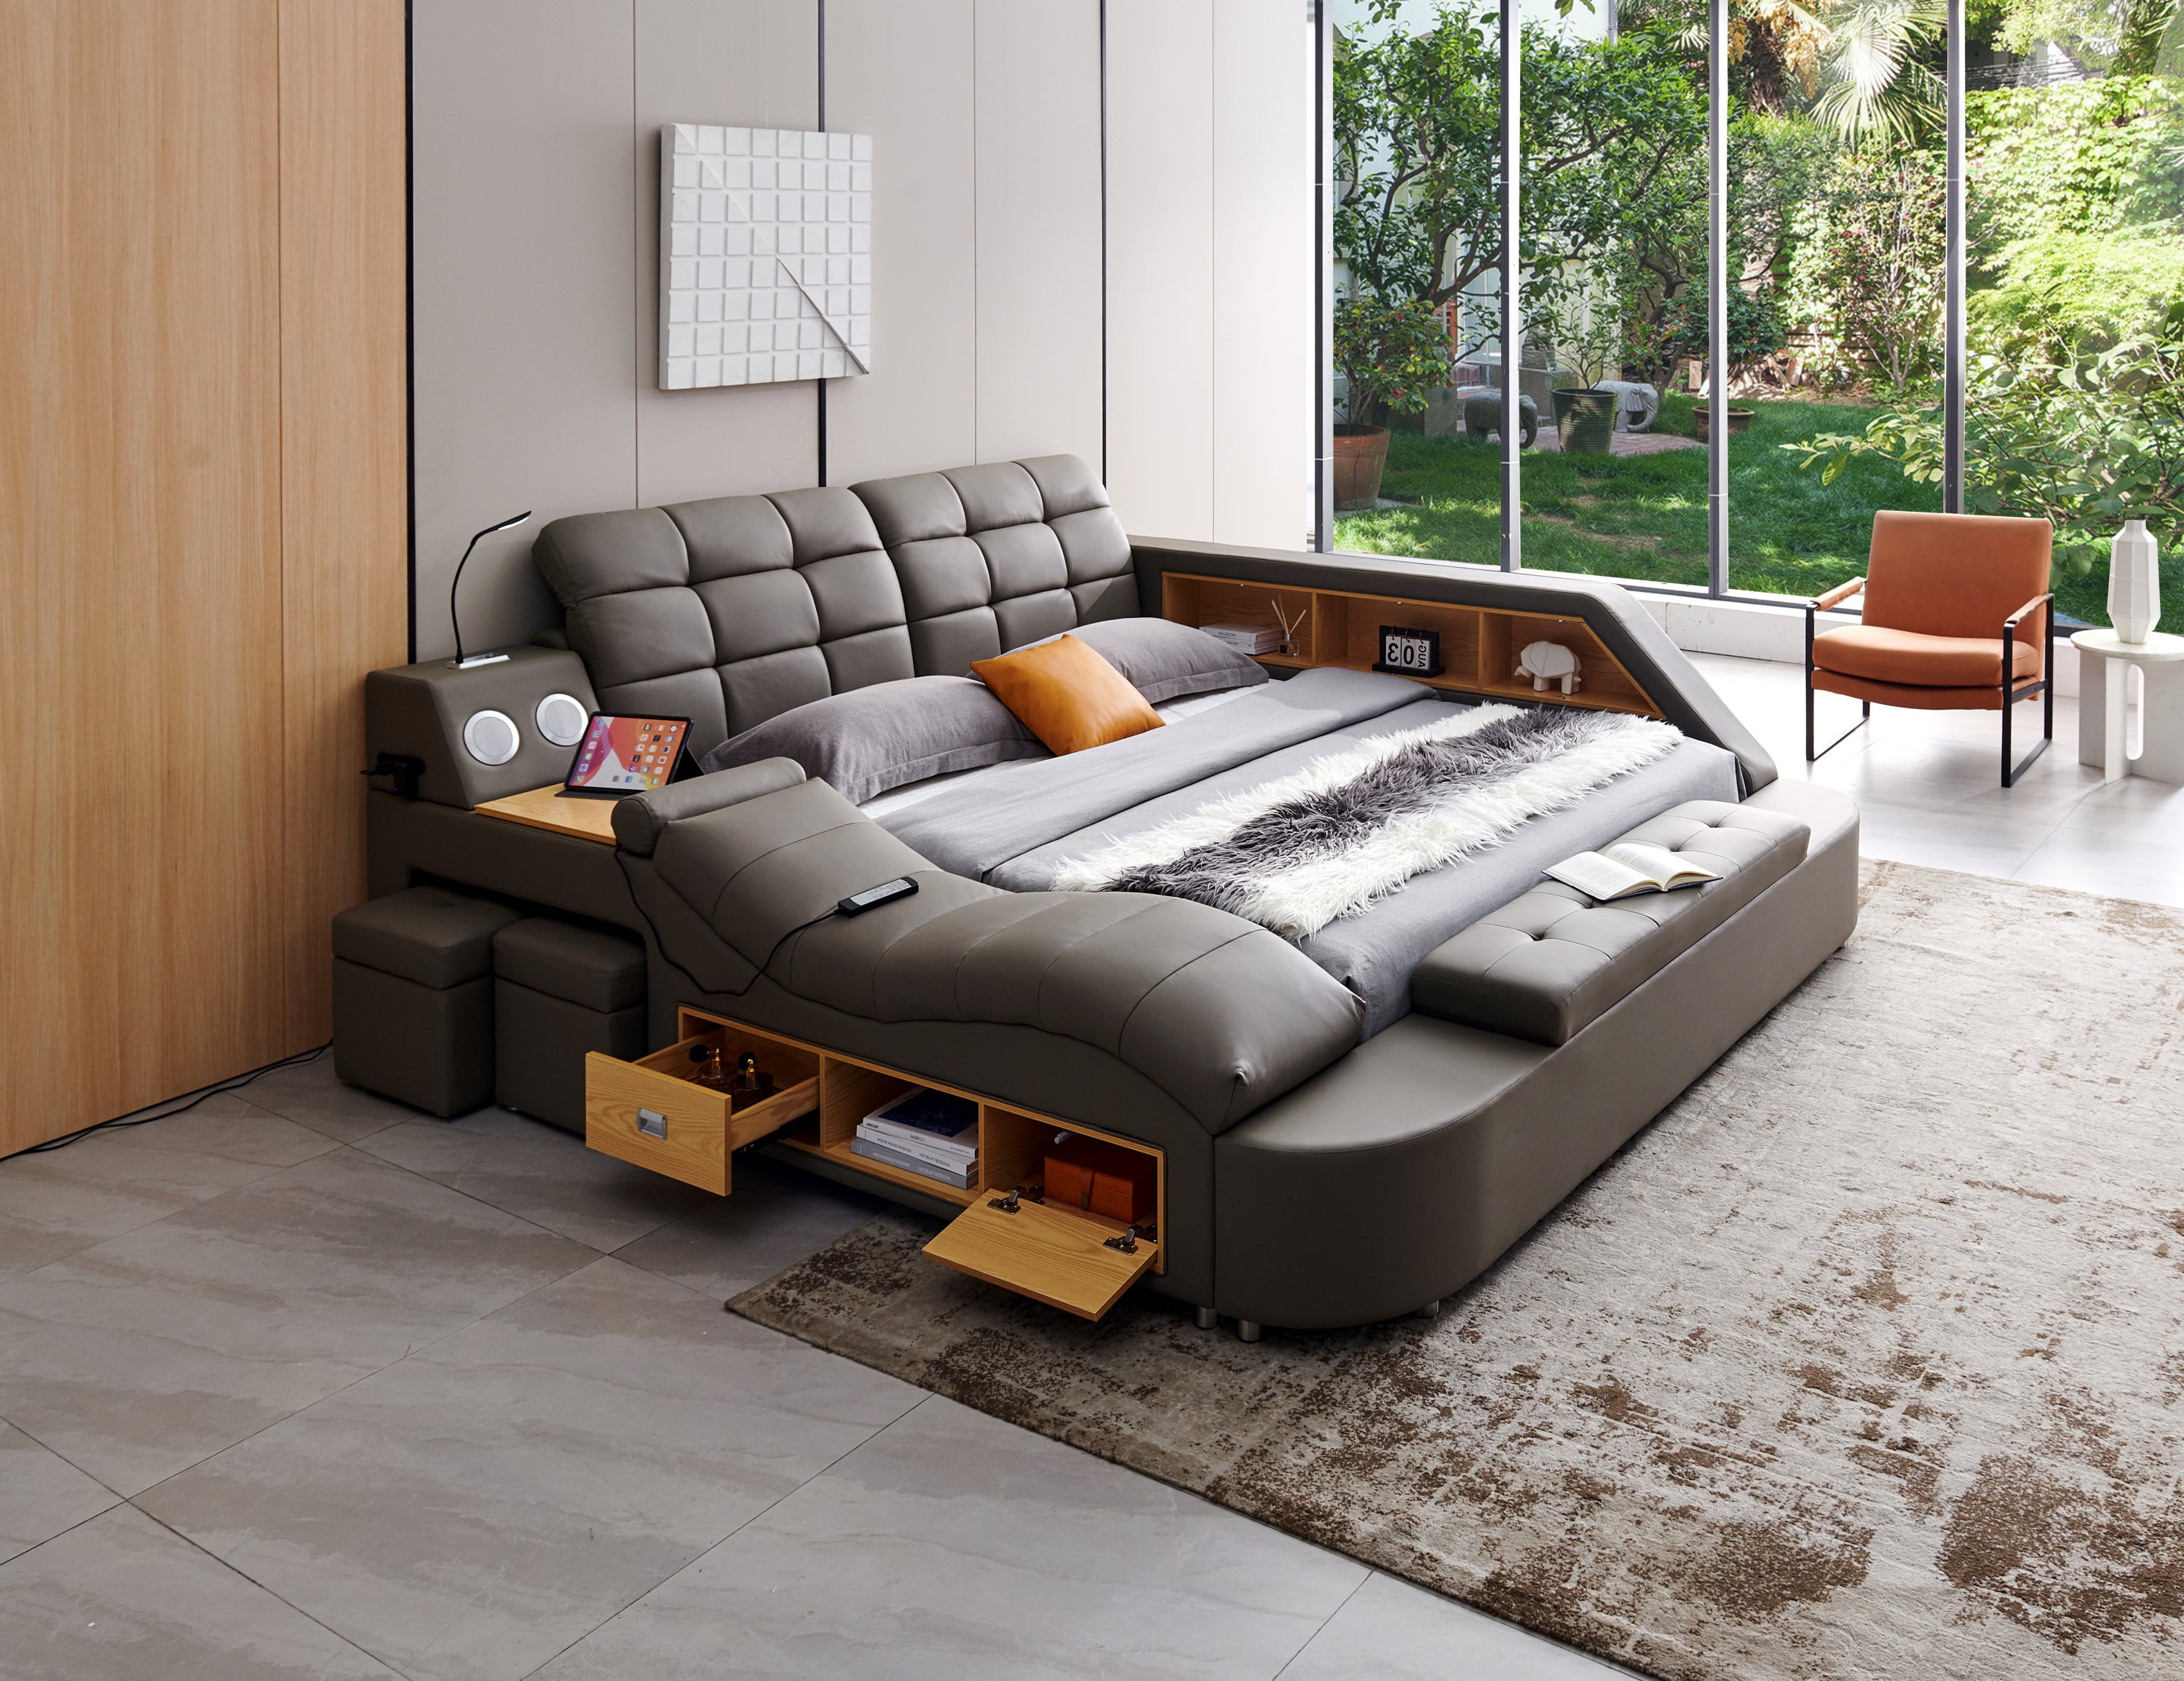 Multifunctional Upholstered Storage Bed Frame, Massage Chaise Lounge on Left, King Size, Grey